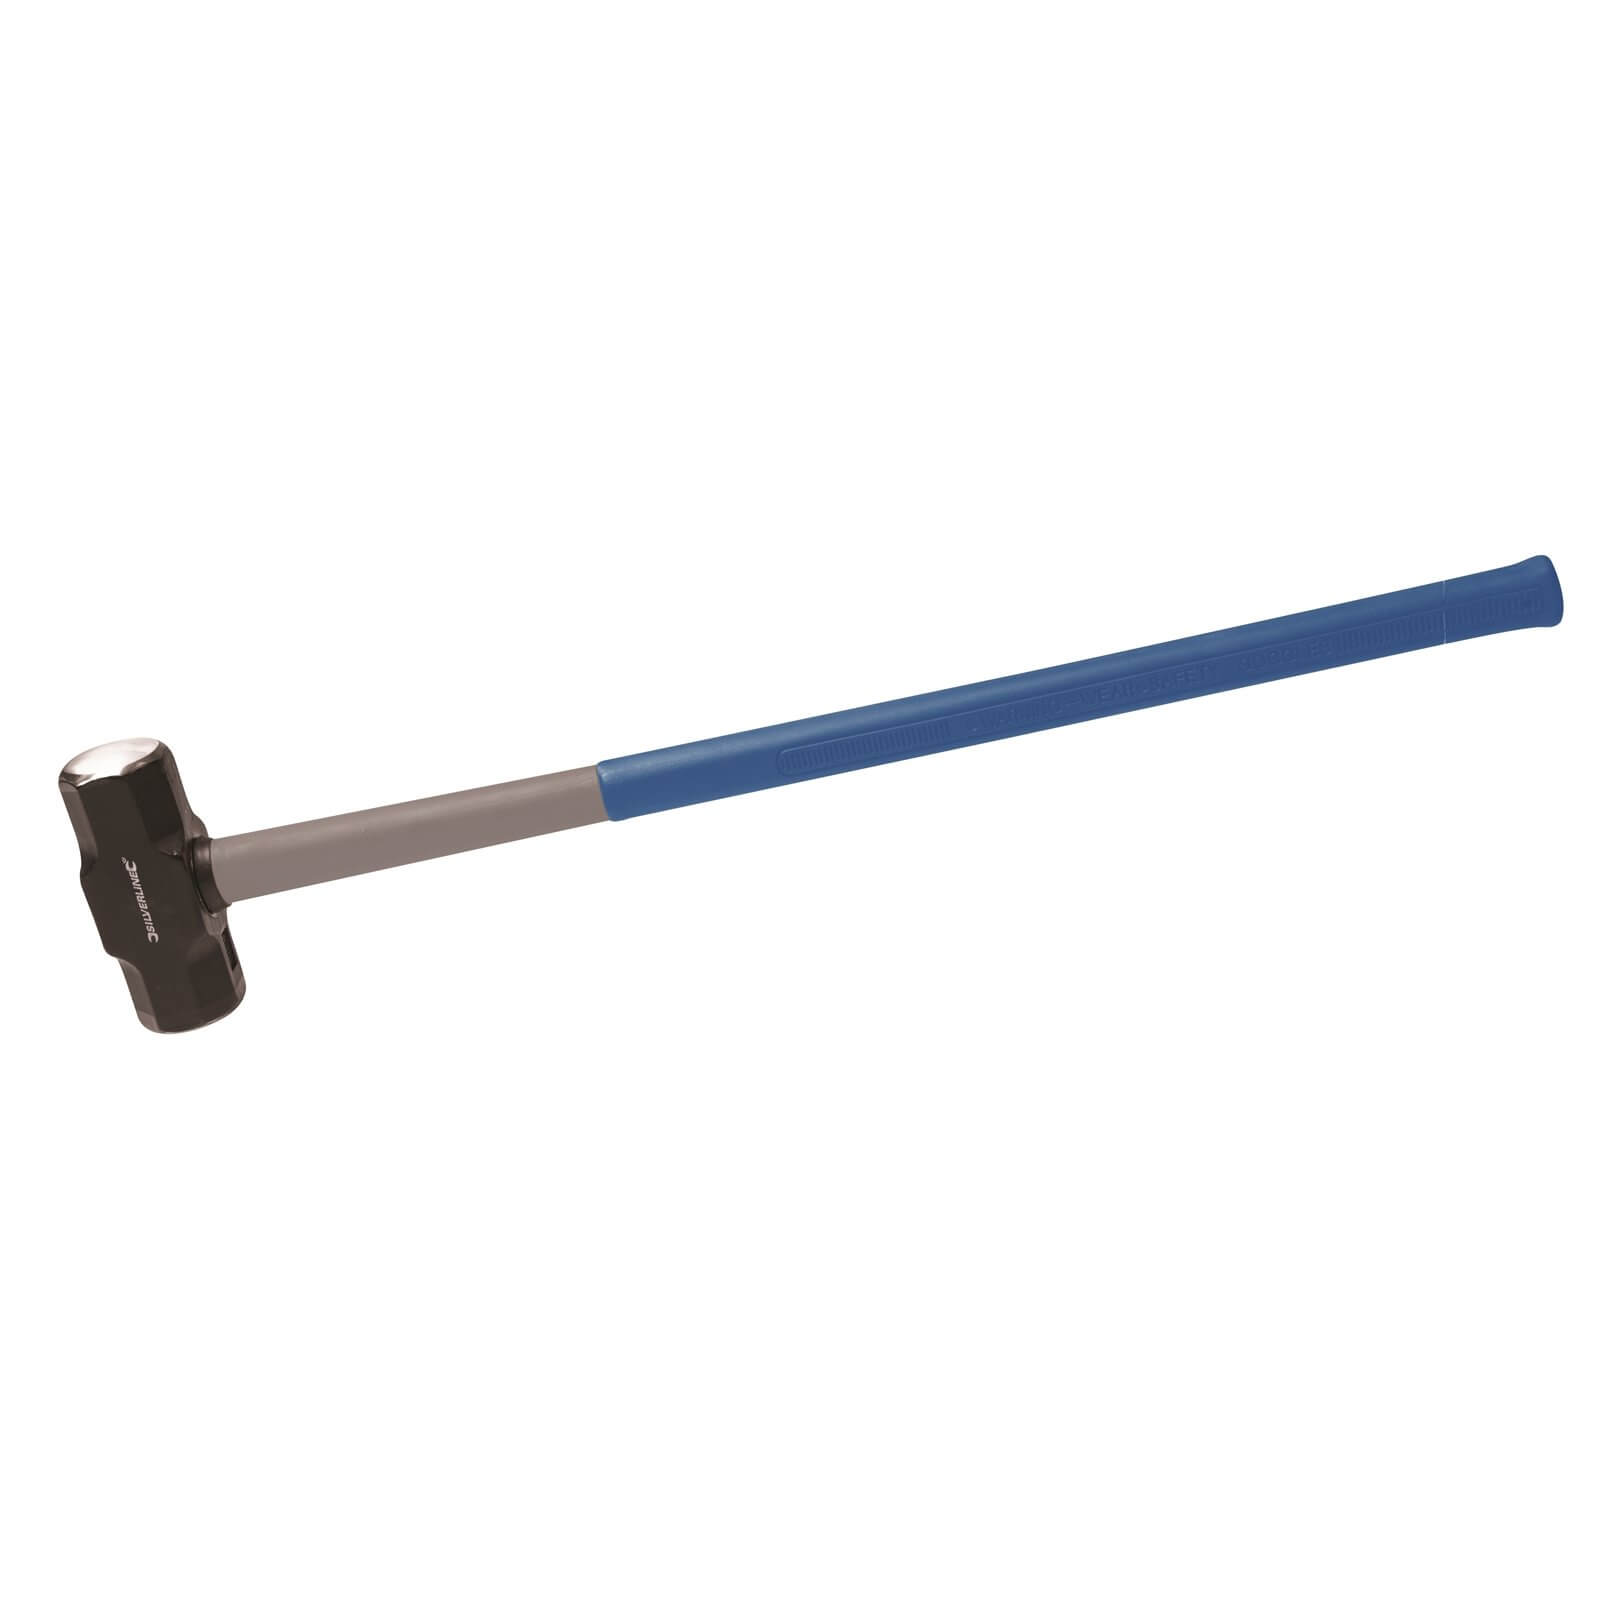 Photo of Silverline Fibreglass Sledge Hammer - 10lb -4.54kg-